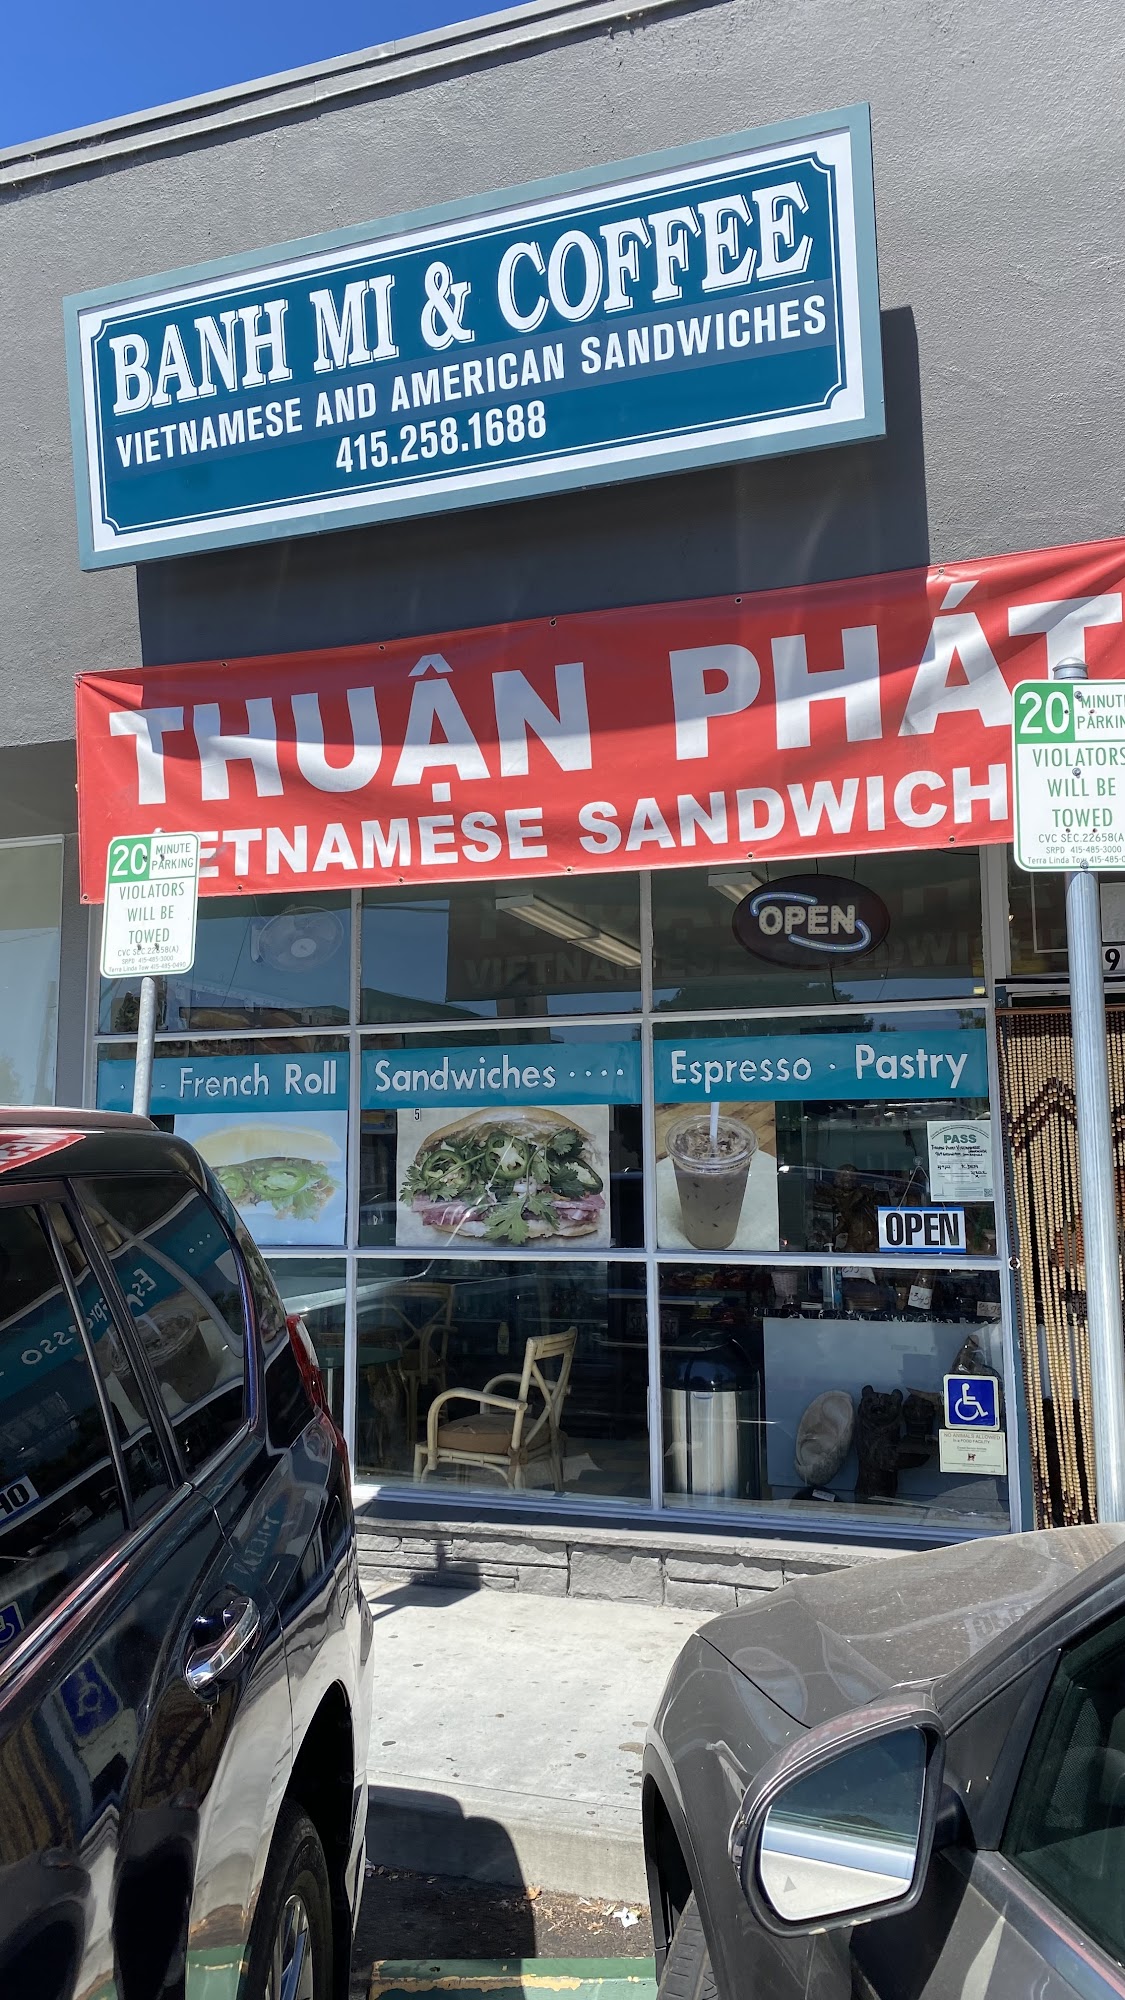 Thuan Phat Vietnamese Sandwiches